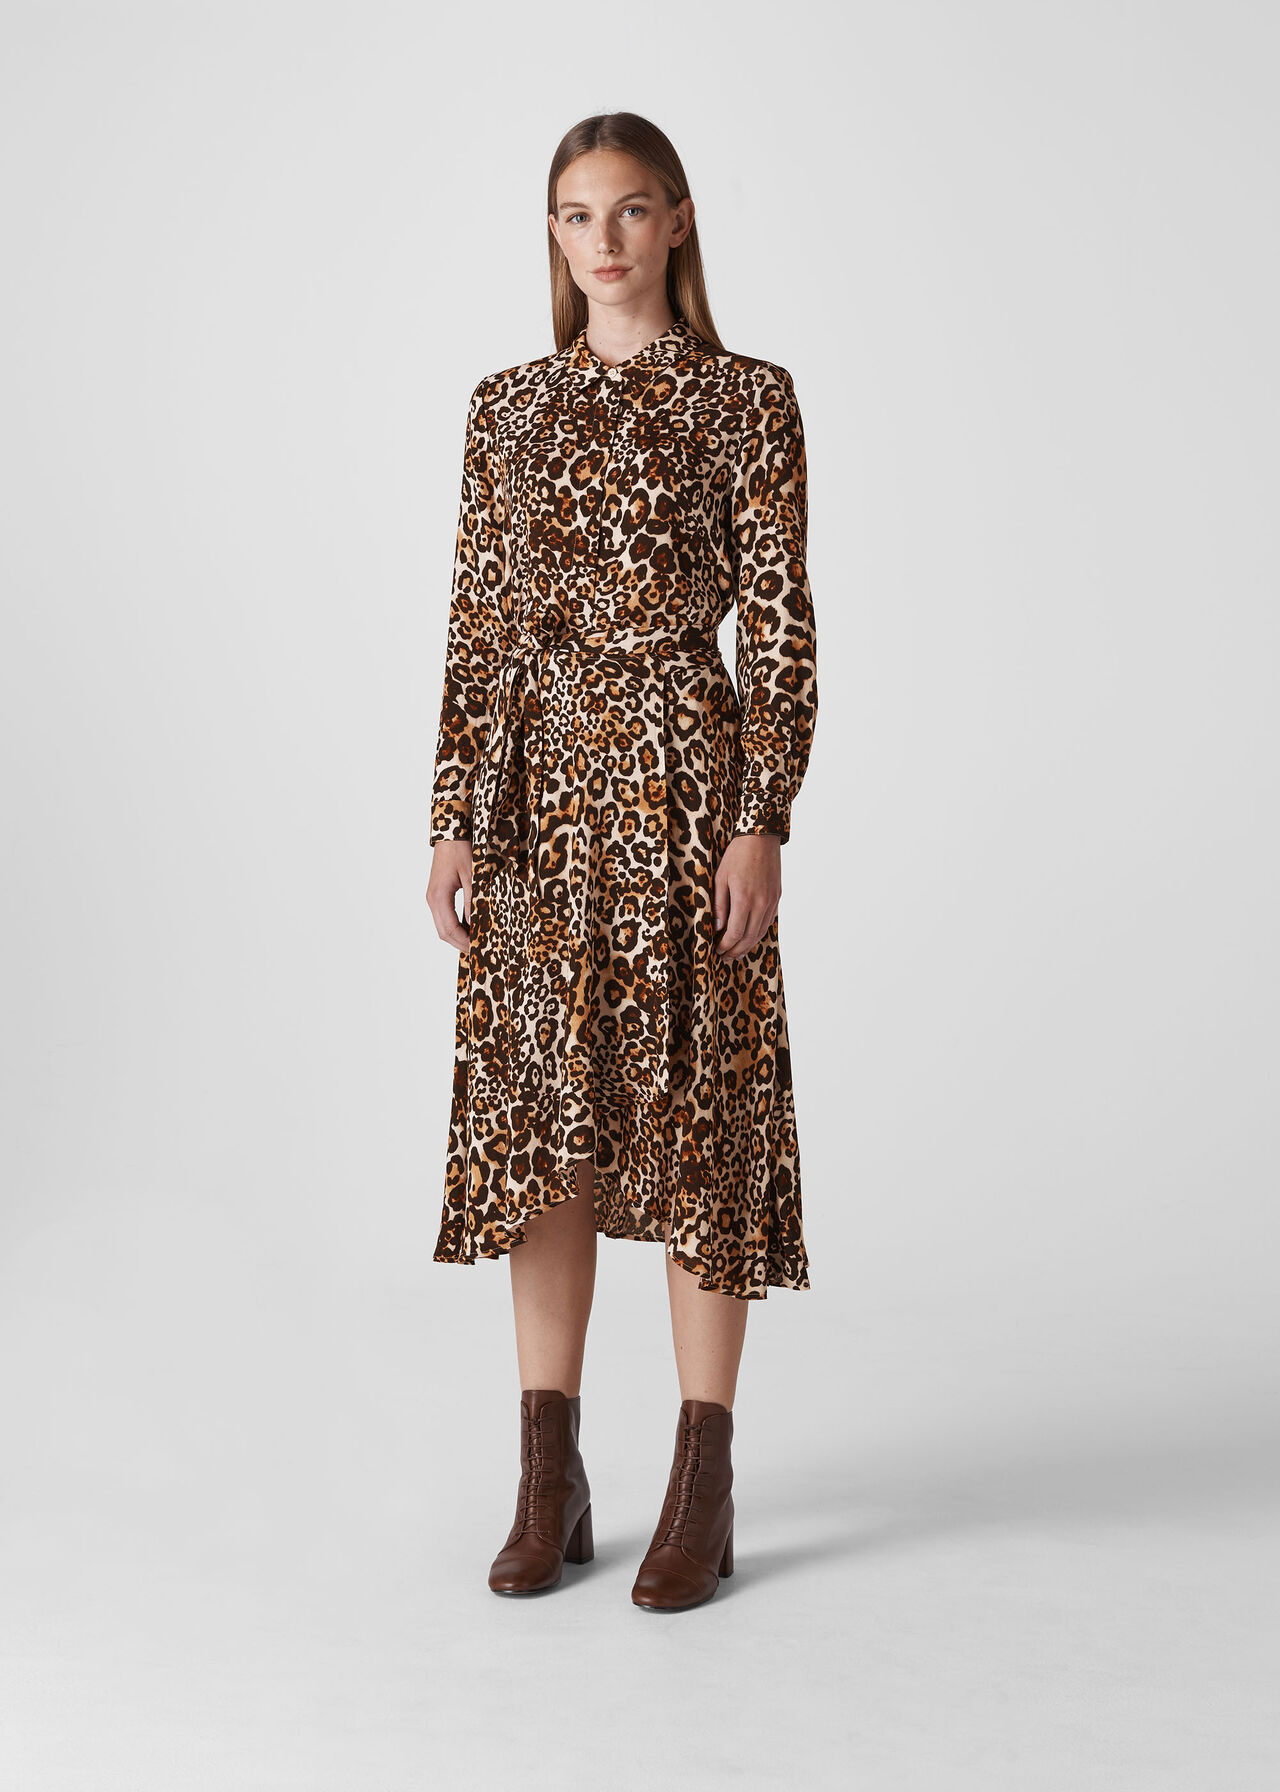 Leopard Print Animal Print Esme Dress | WHISTLES |